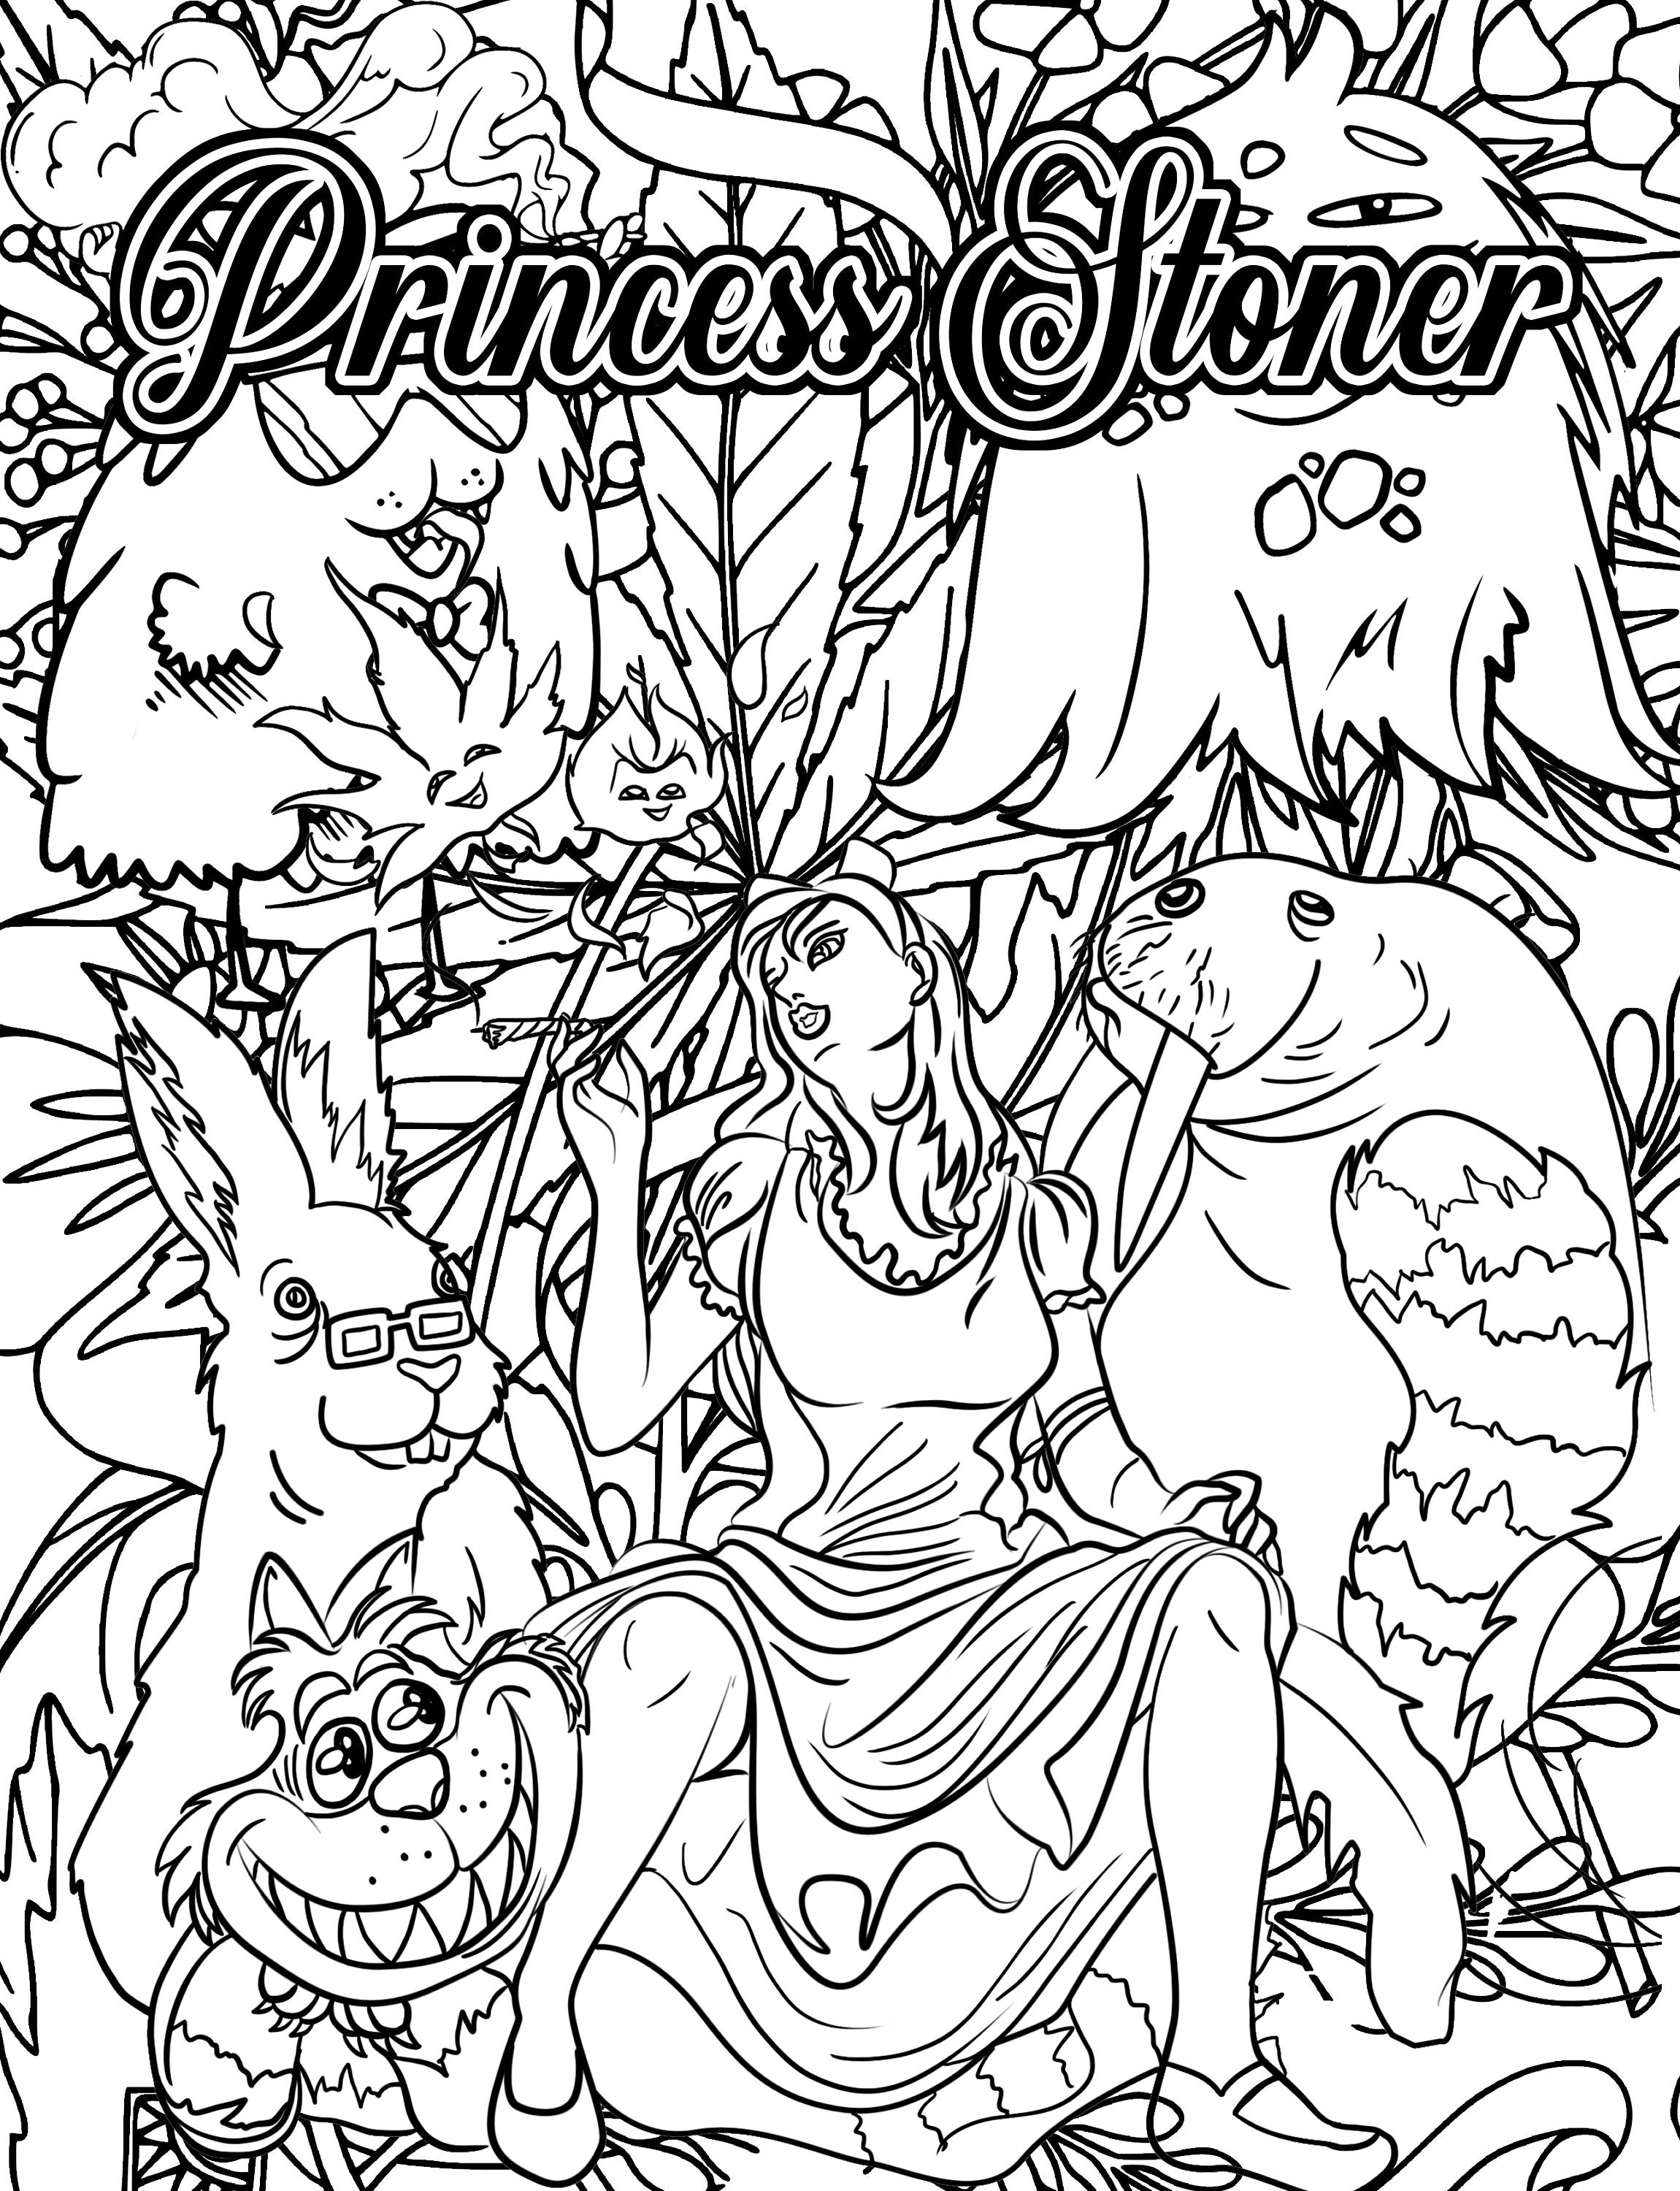 18-disney-princess-stoner-coloring-book-pages-rajinekassius